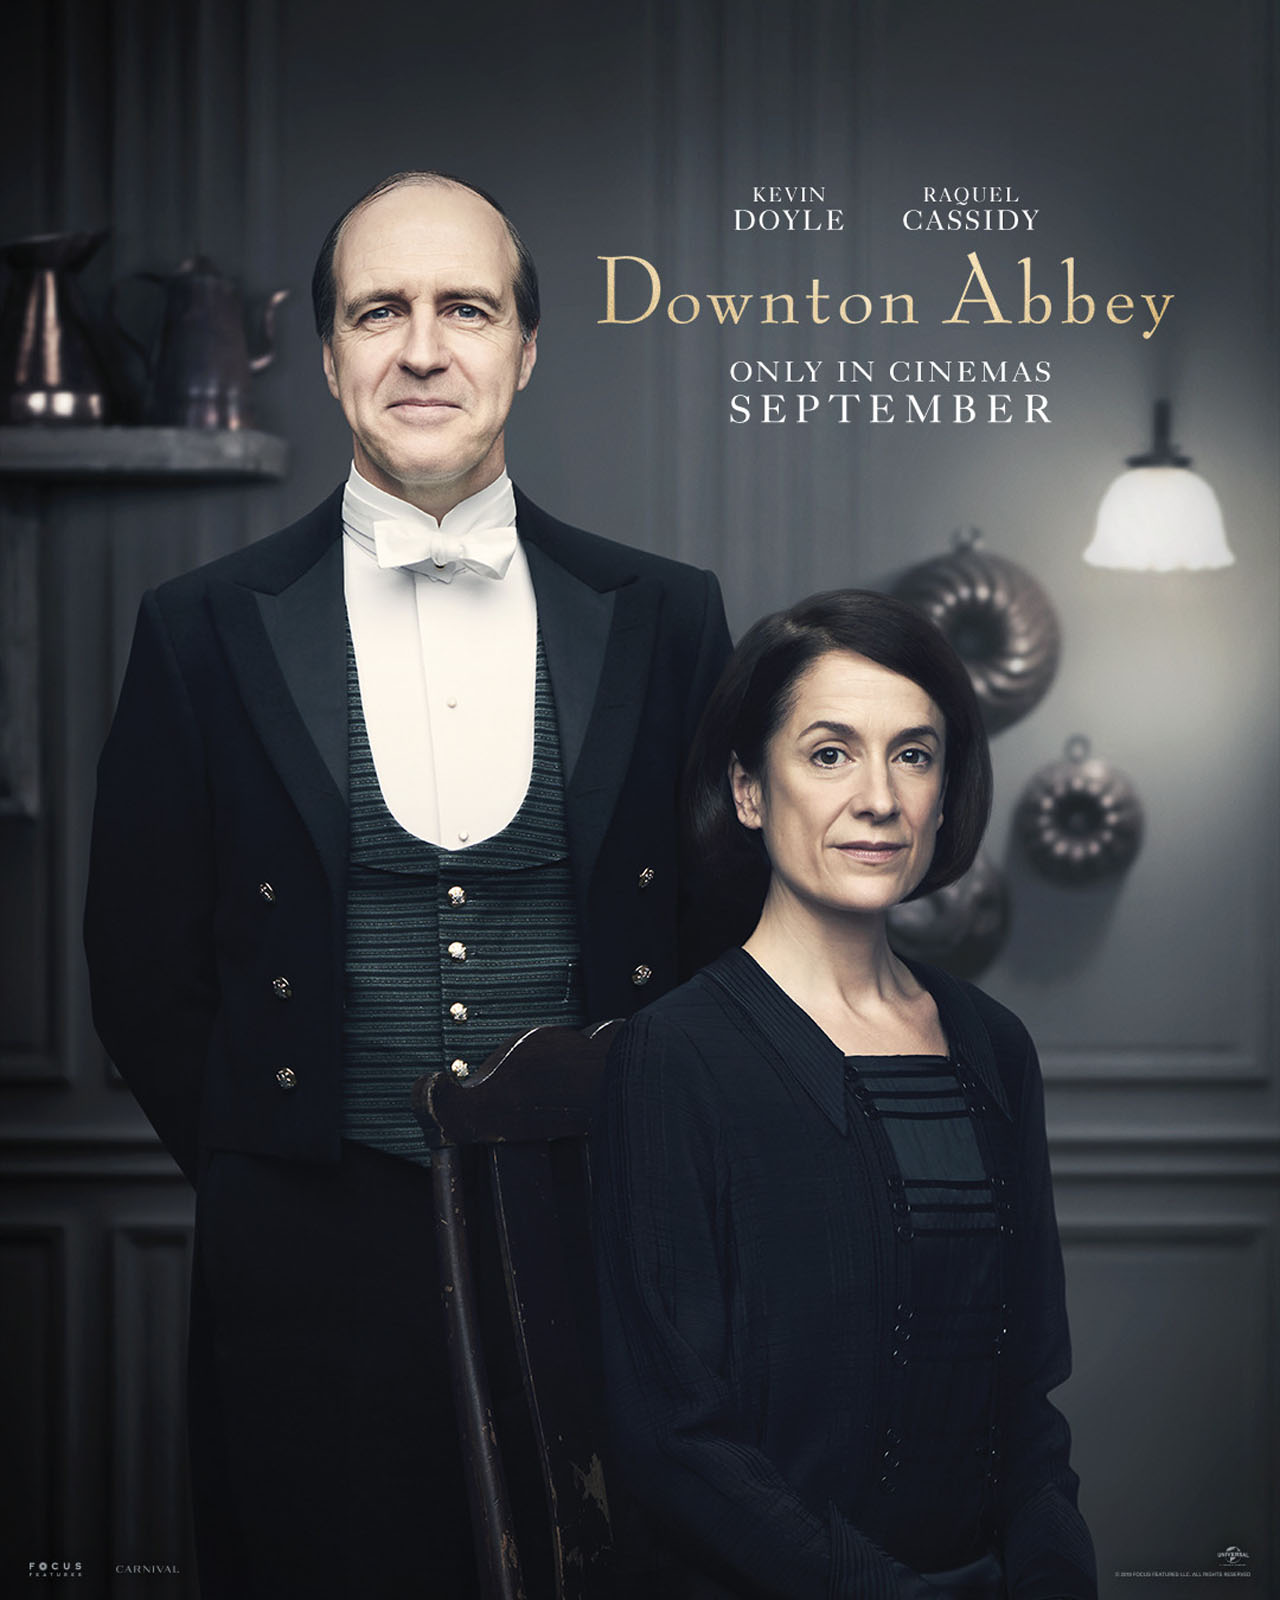 Poster zum Downton Abbey - Bild 21 - FILMSTARTS.de1280 x 1600